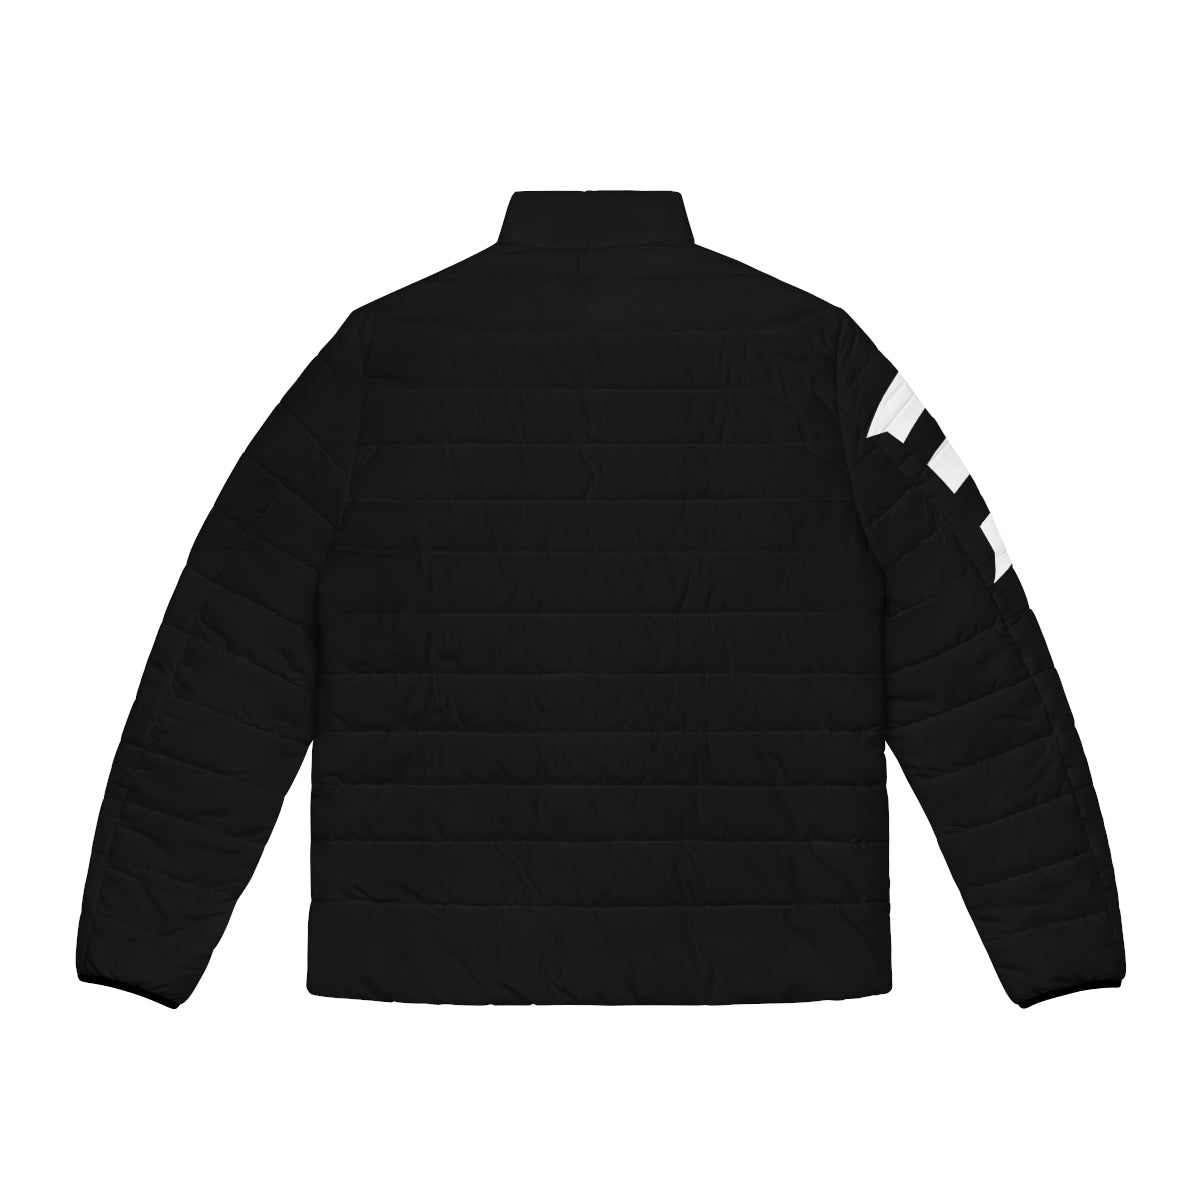 Entrepreneur Black Puffer Jacket (Fall Collection)